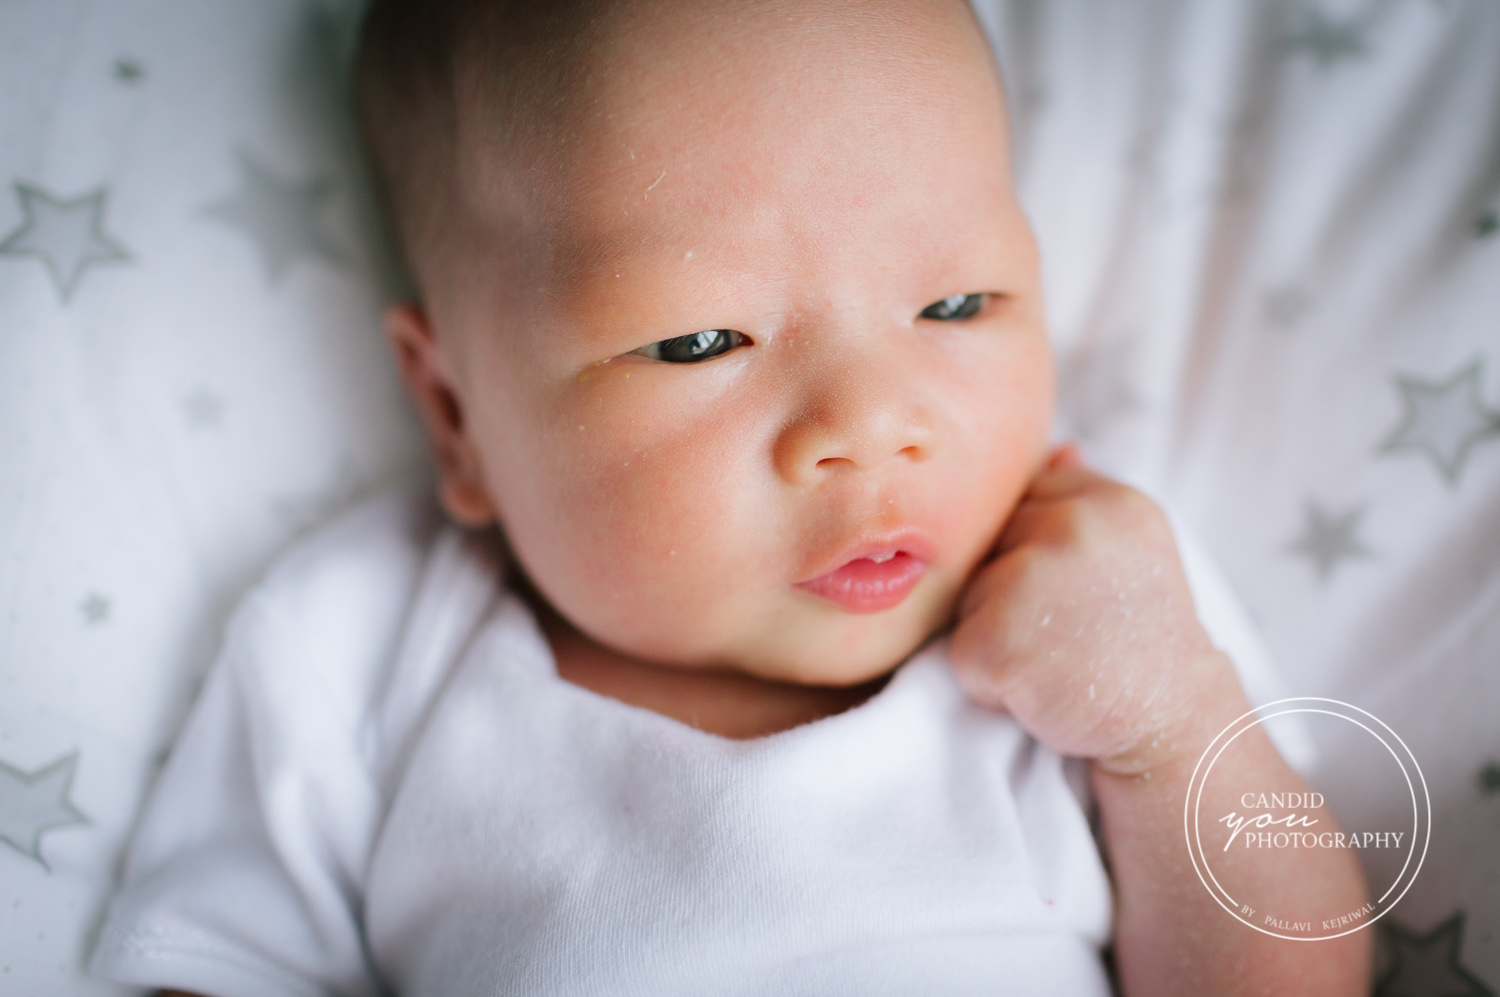 Birmingham Asian Newborn Baby Girl with hand on chin